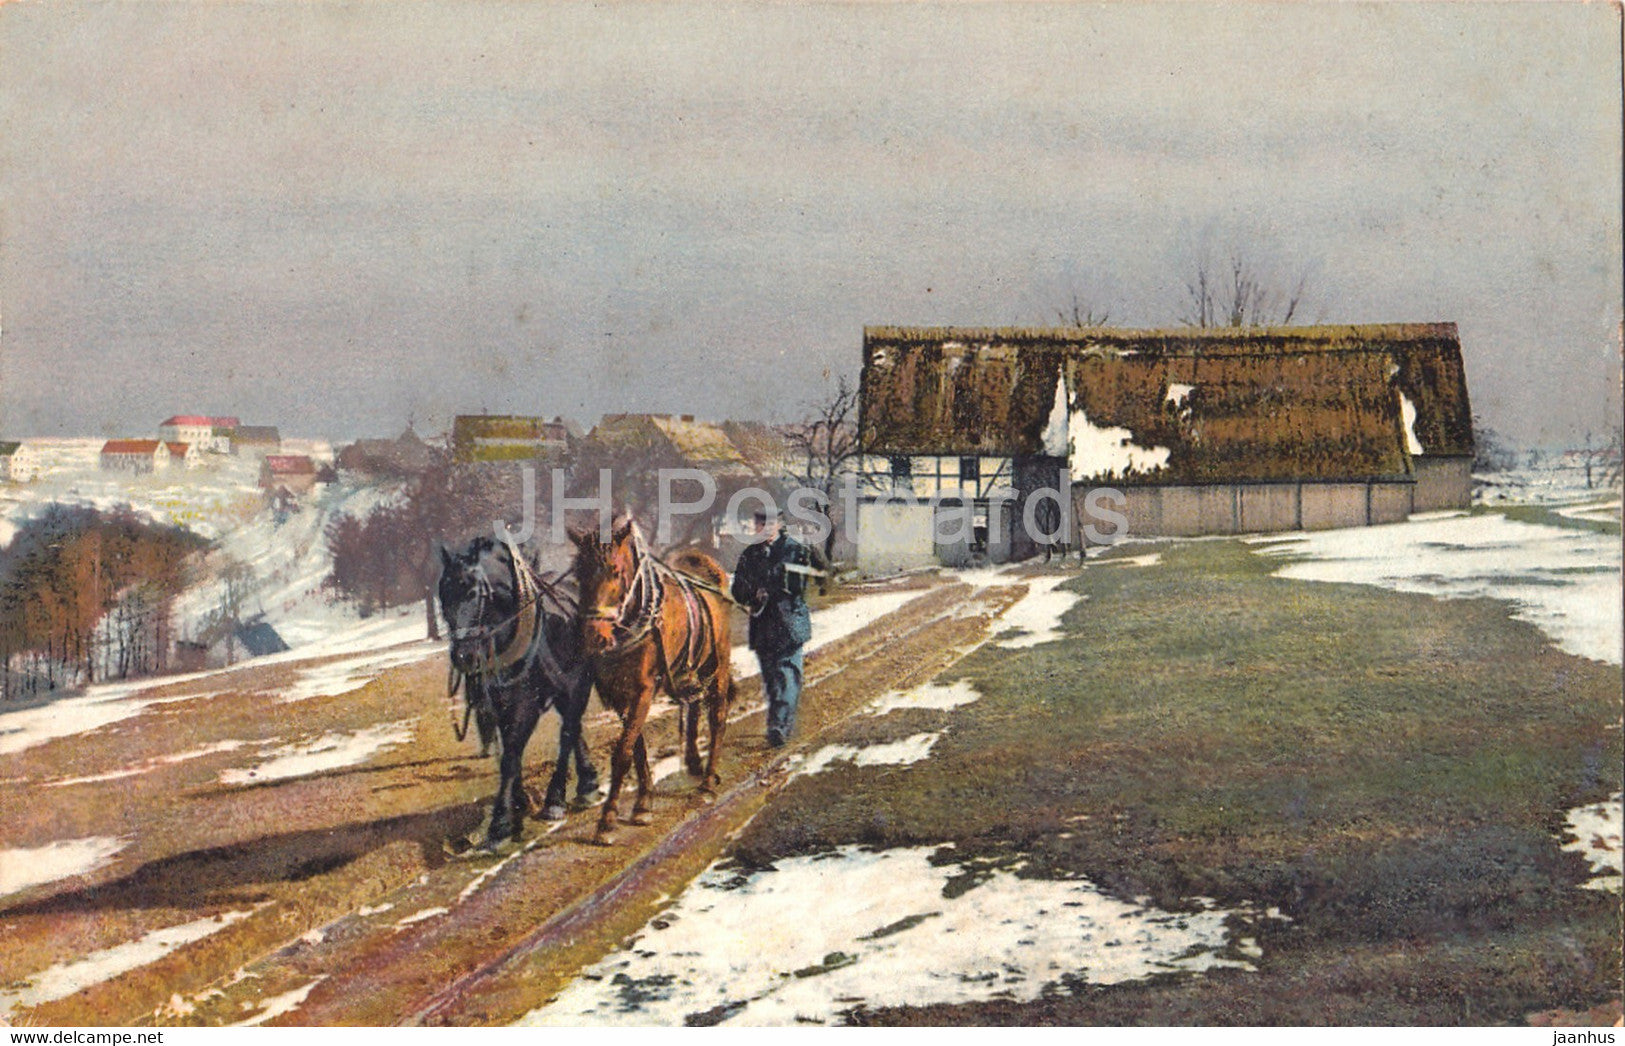 horse - farm - Photochromie 2412 - Serie 119 - old postcard -  Germany - unused - JH Postcards